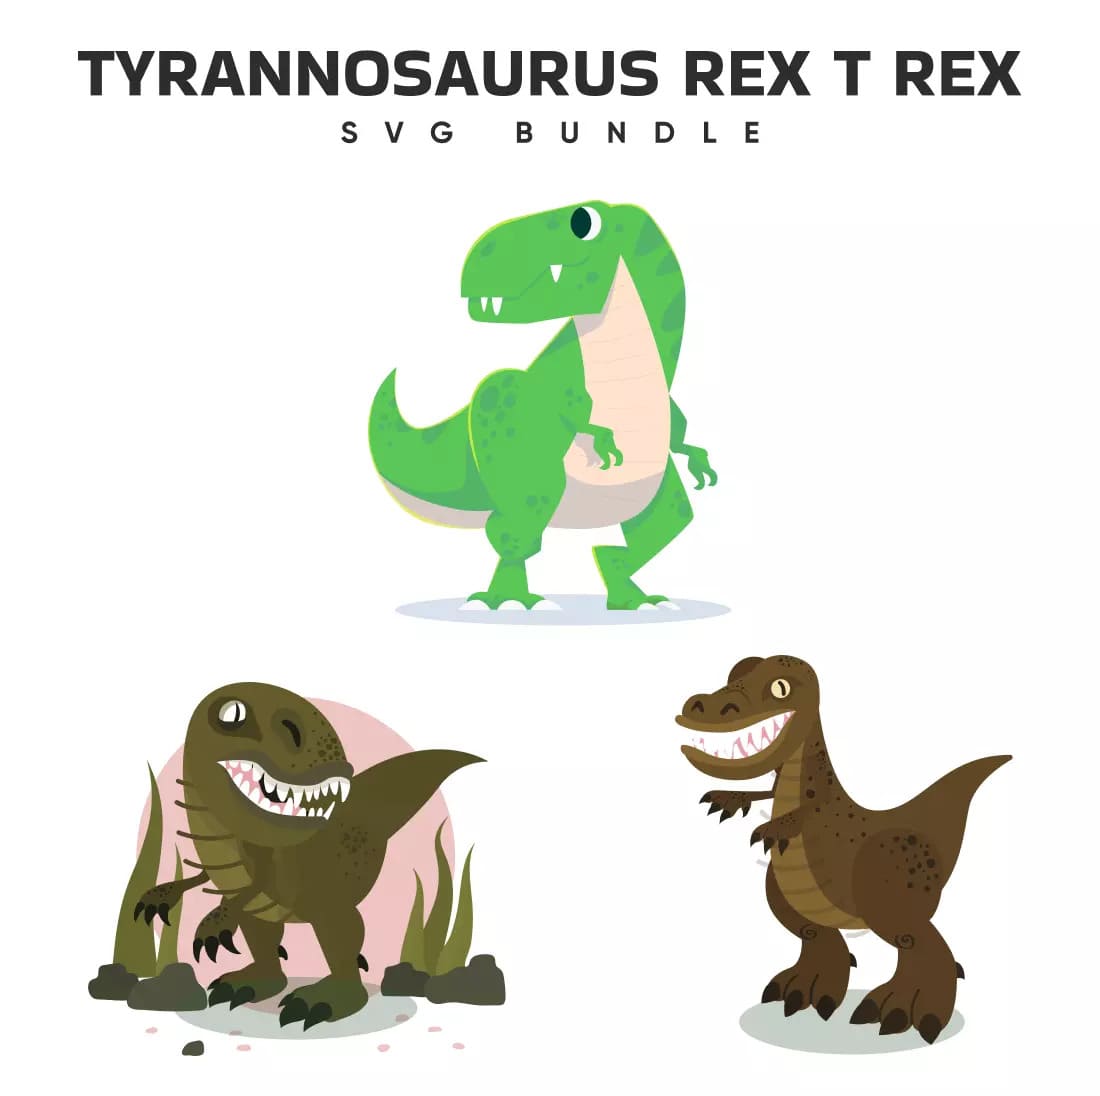 Tyrannosaurus Rex T-rex SVG Bundle Preview.